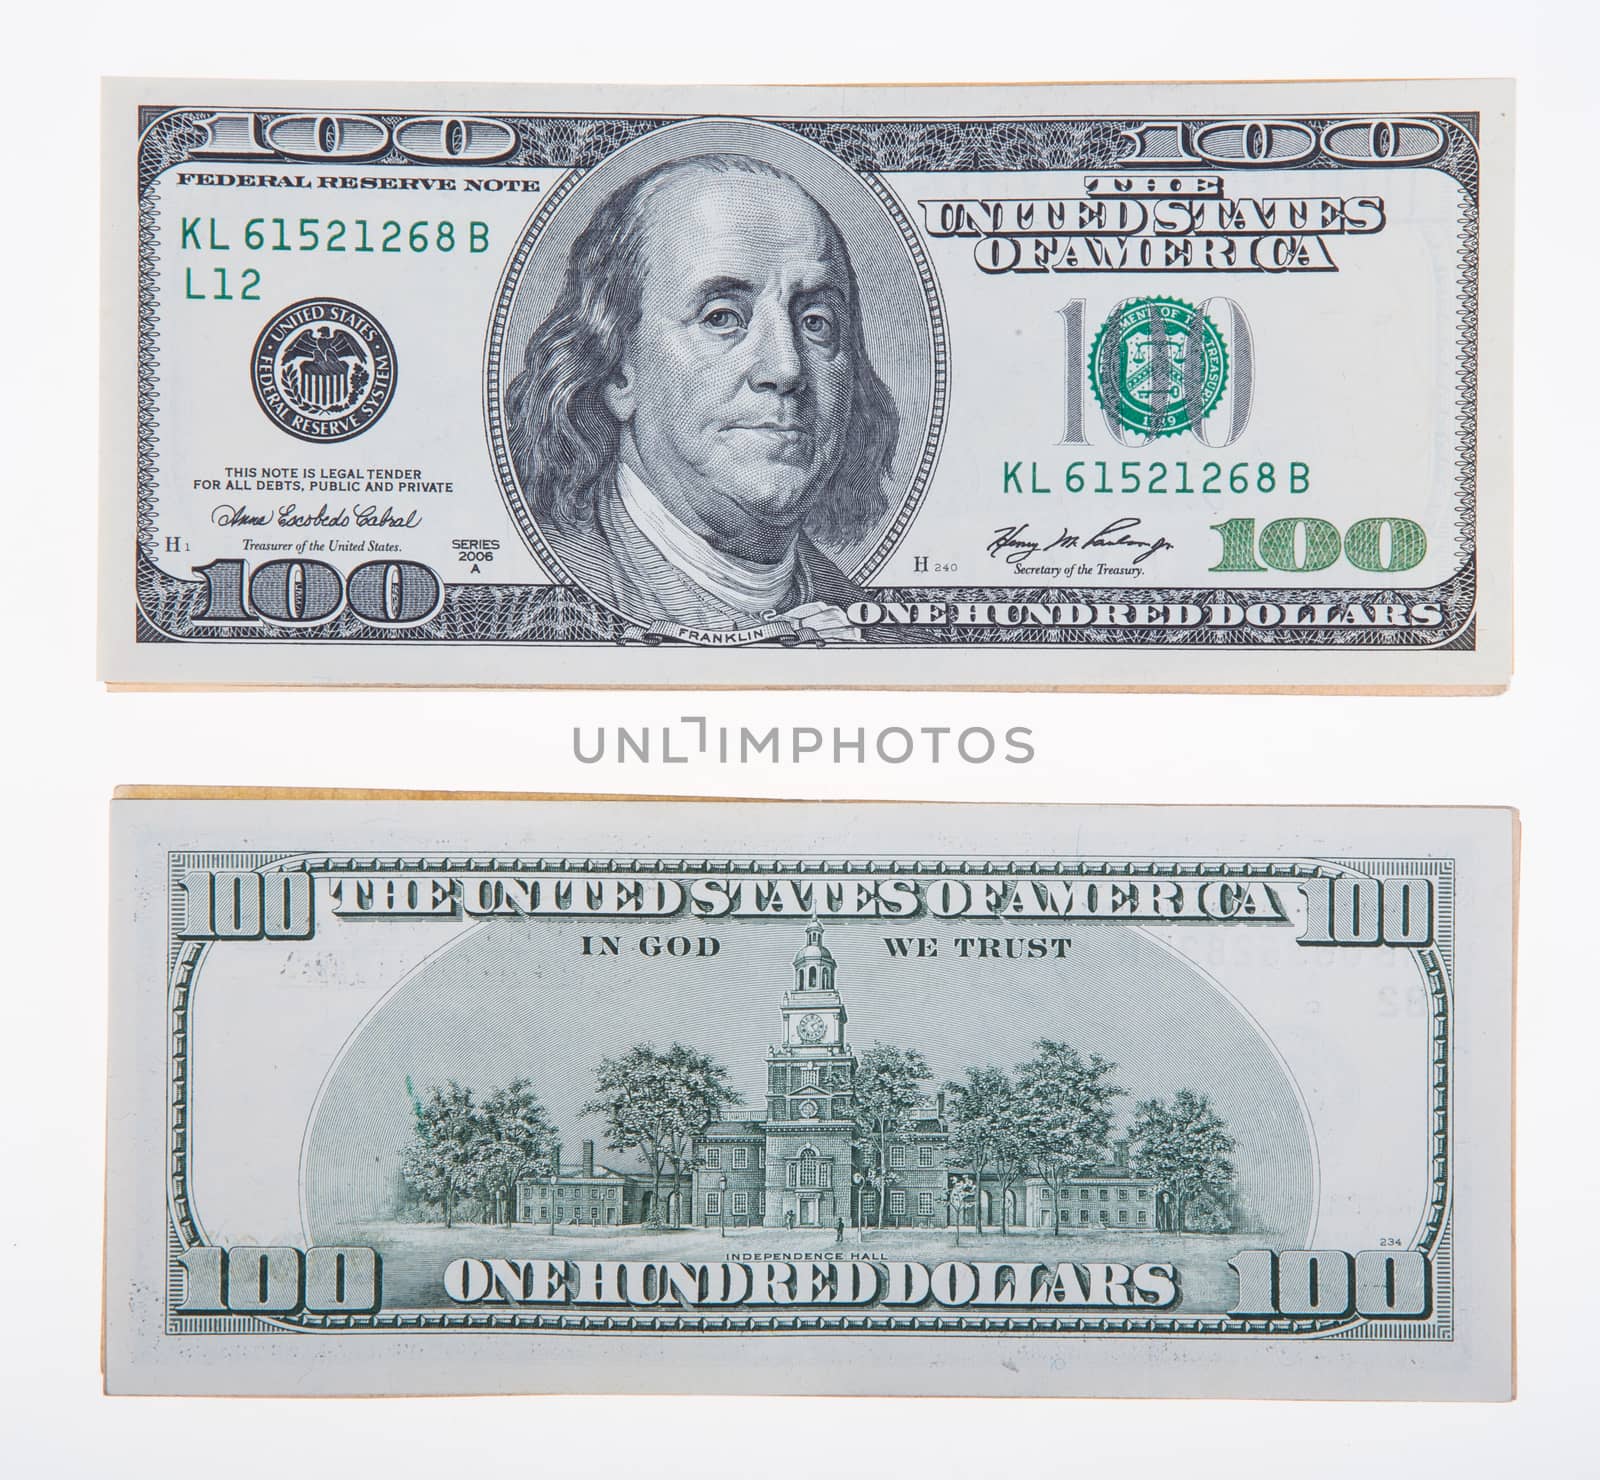 dollars notes isolated on white background